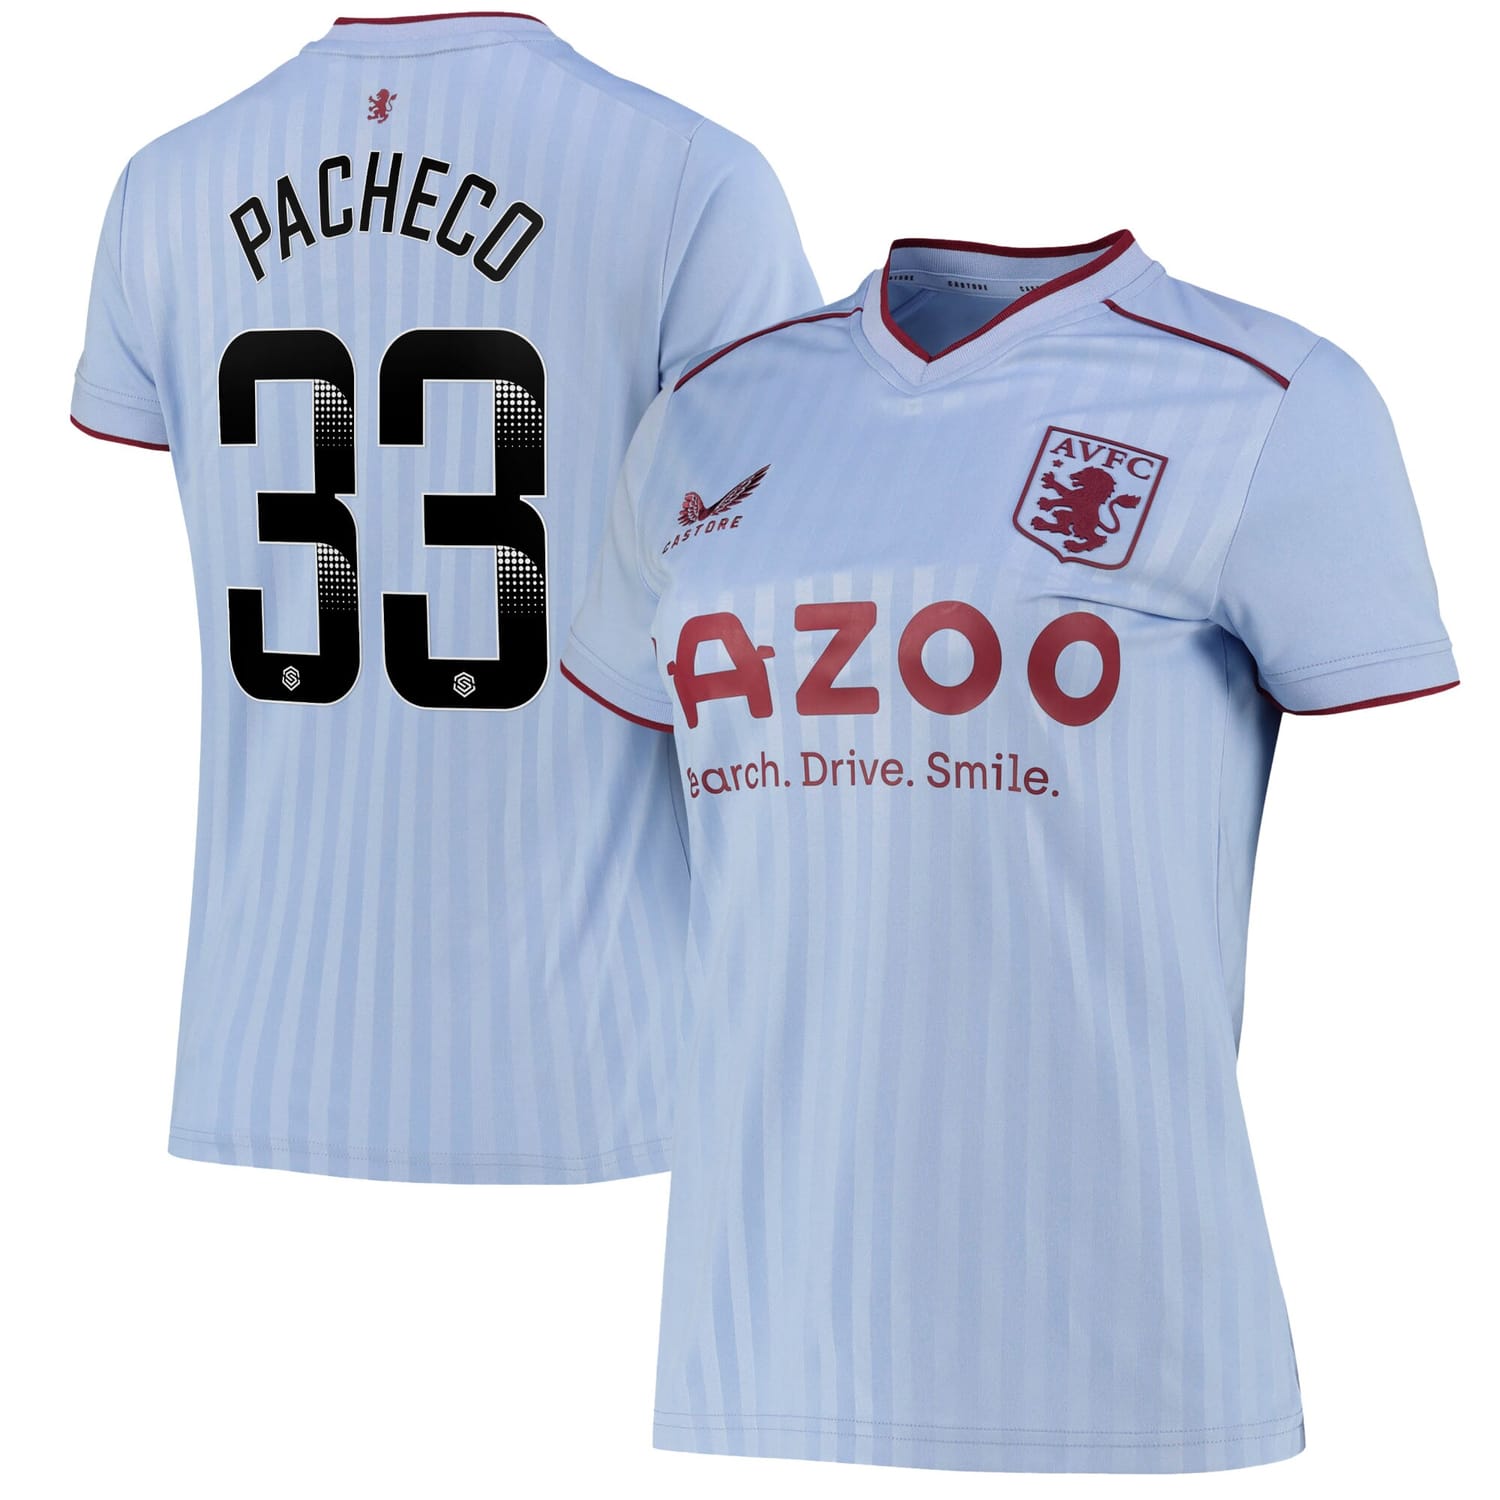 Premier League Aston Villa Away WSL Jersey Shirt 2022-23 player Mayumi Pacheco 33 printing for Women